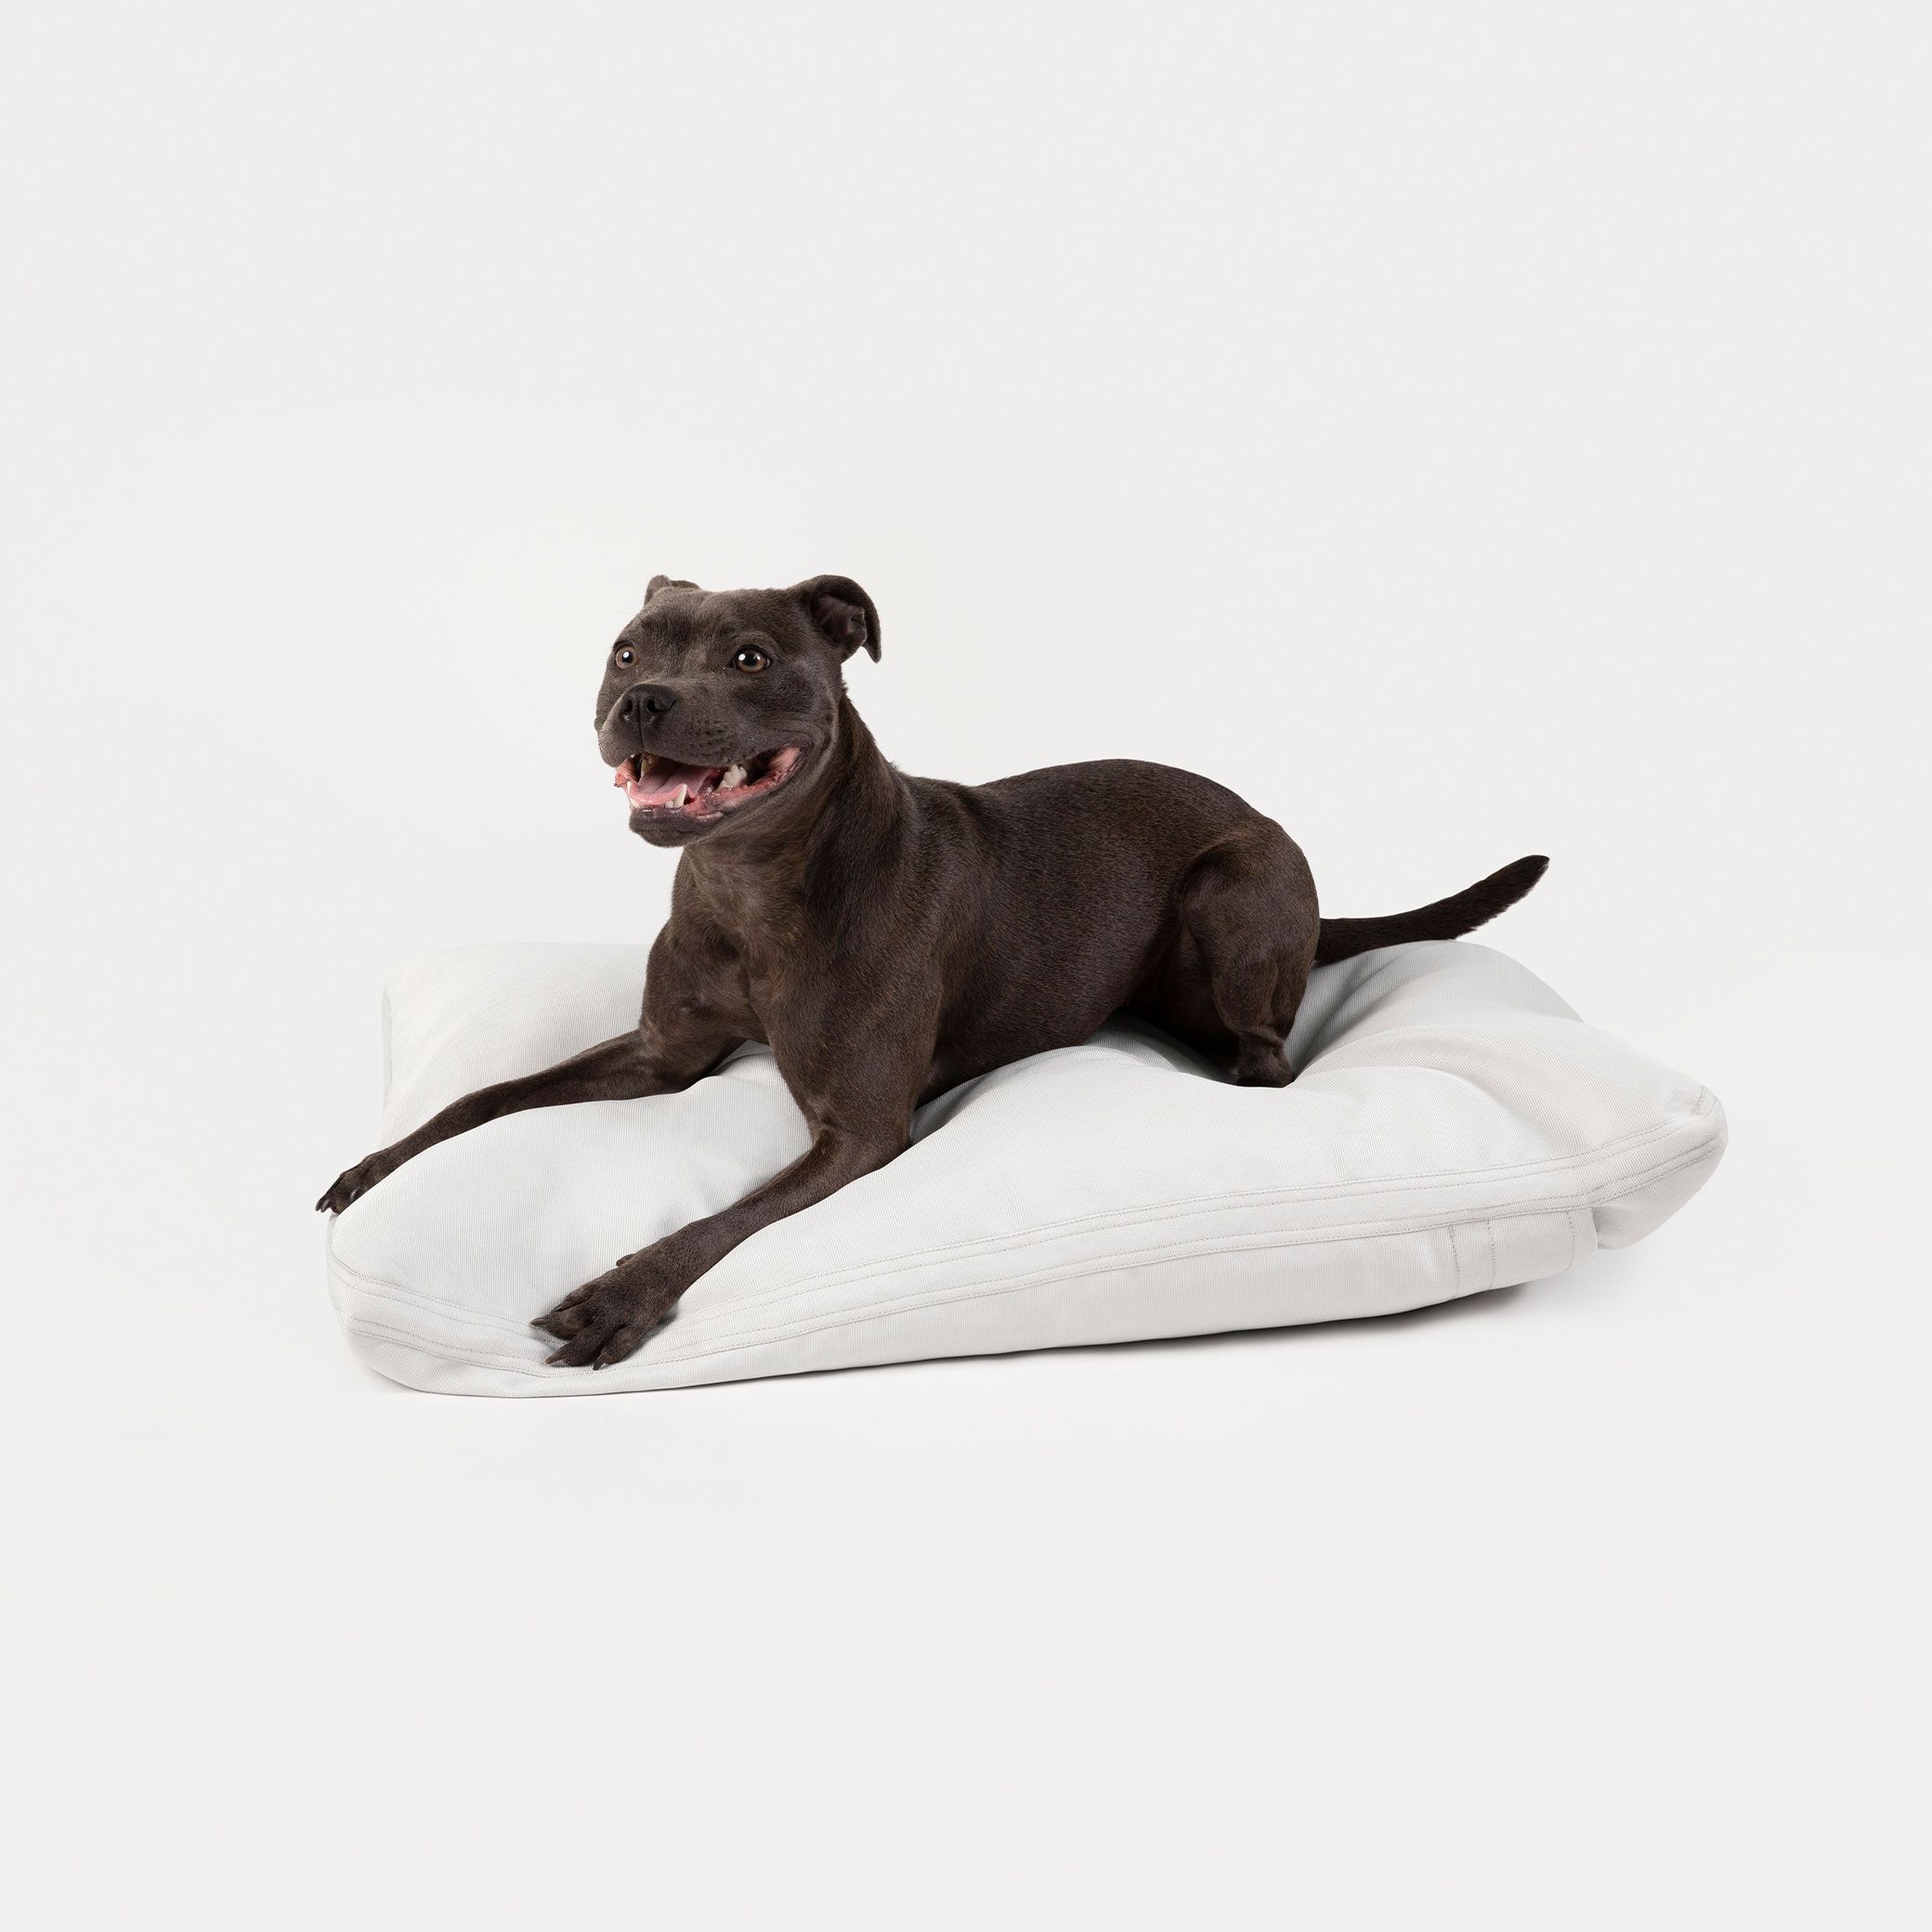 A dark brown dog lying on the ash Pillo.